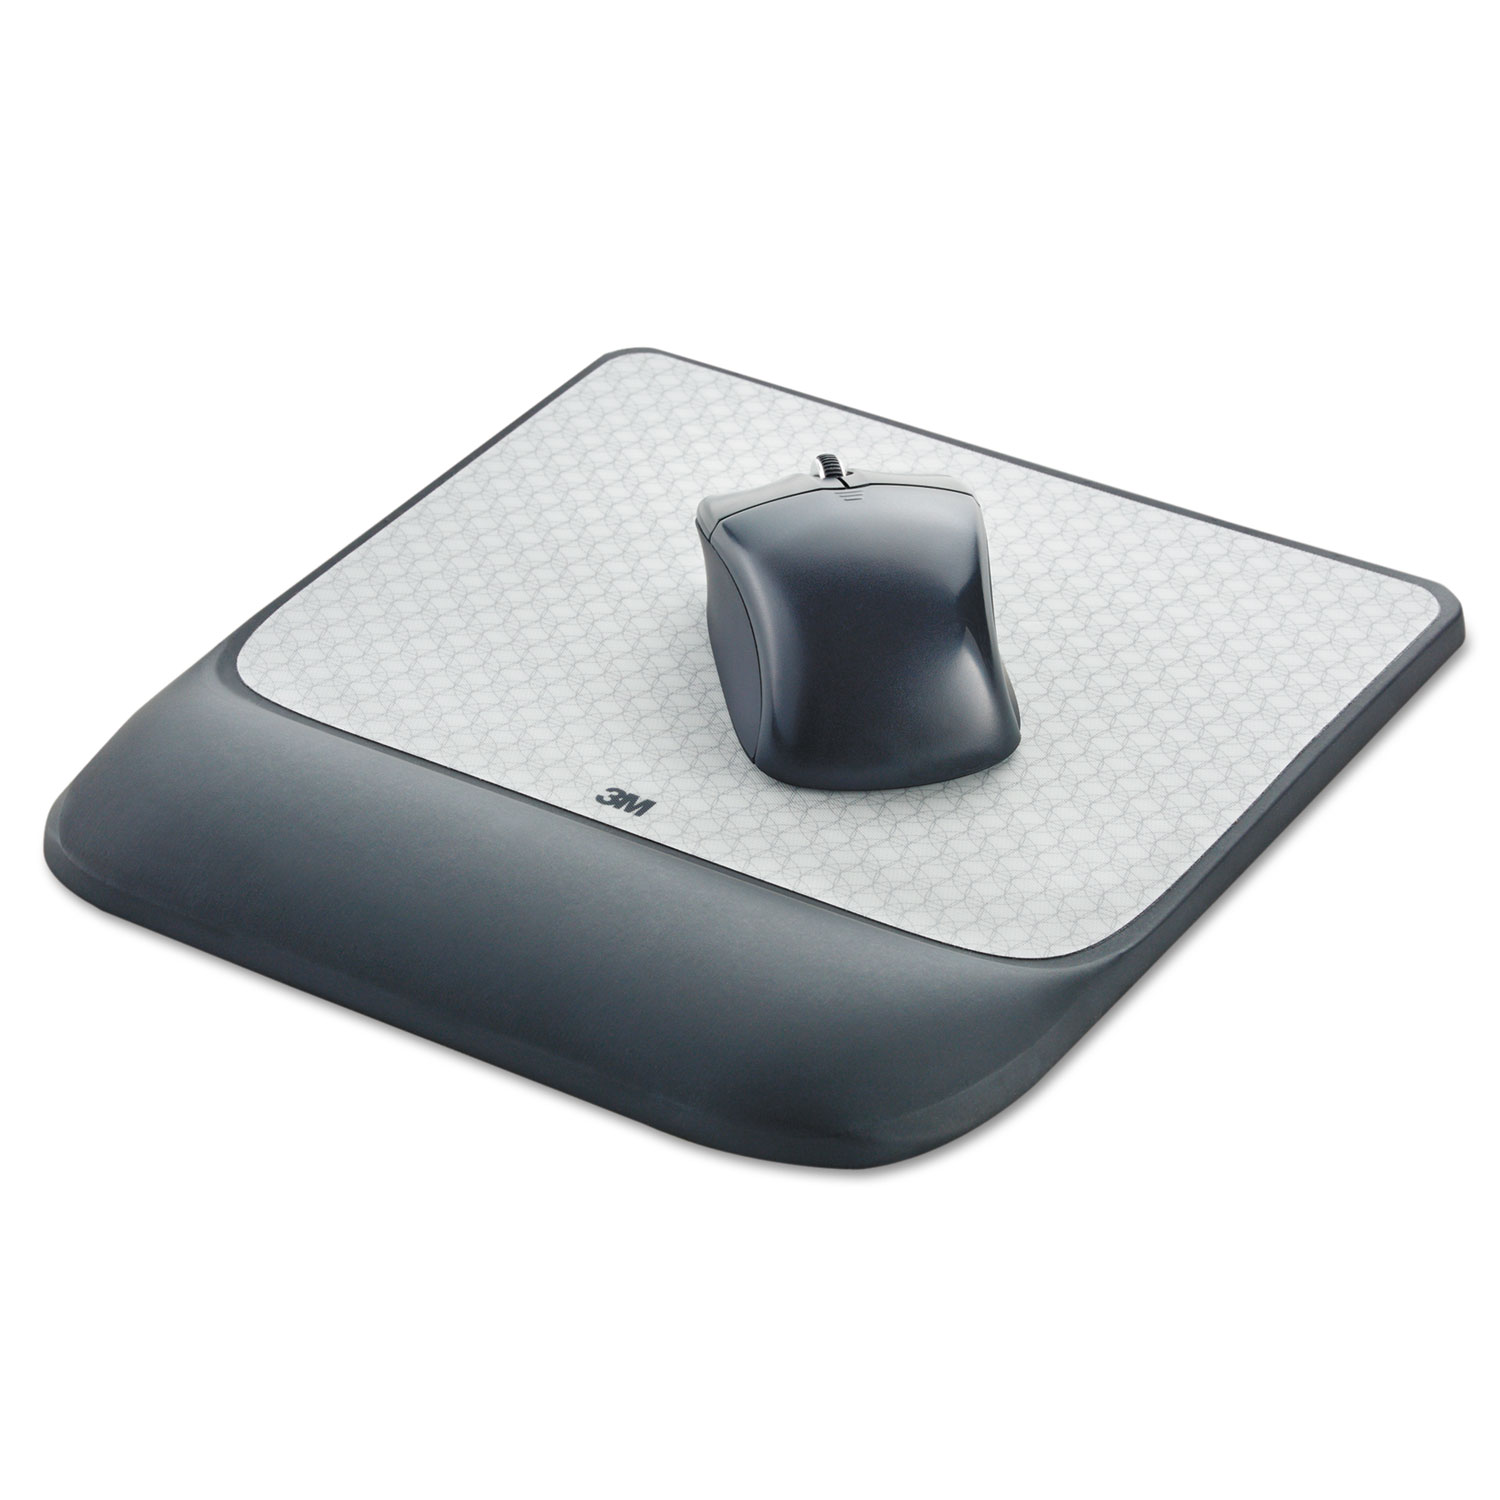 Mouse Pad w/Precise Mousing Surface w/Gel Wrist Rest, 8 1/2x 9x 3/4, Solid Color